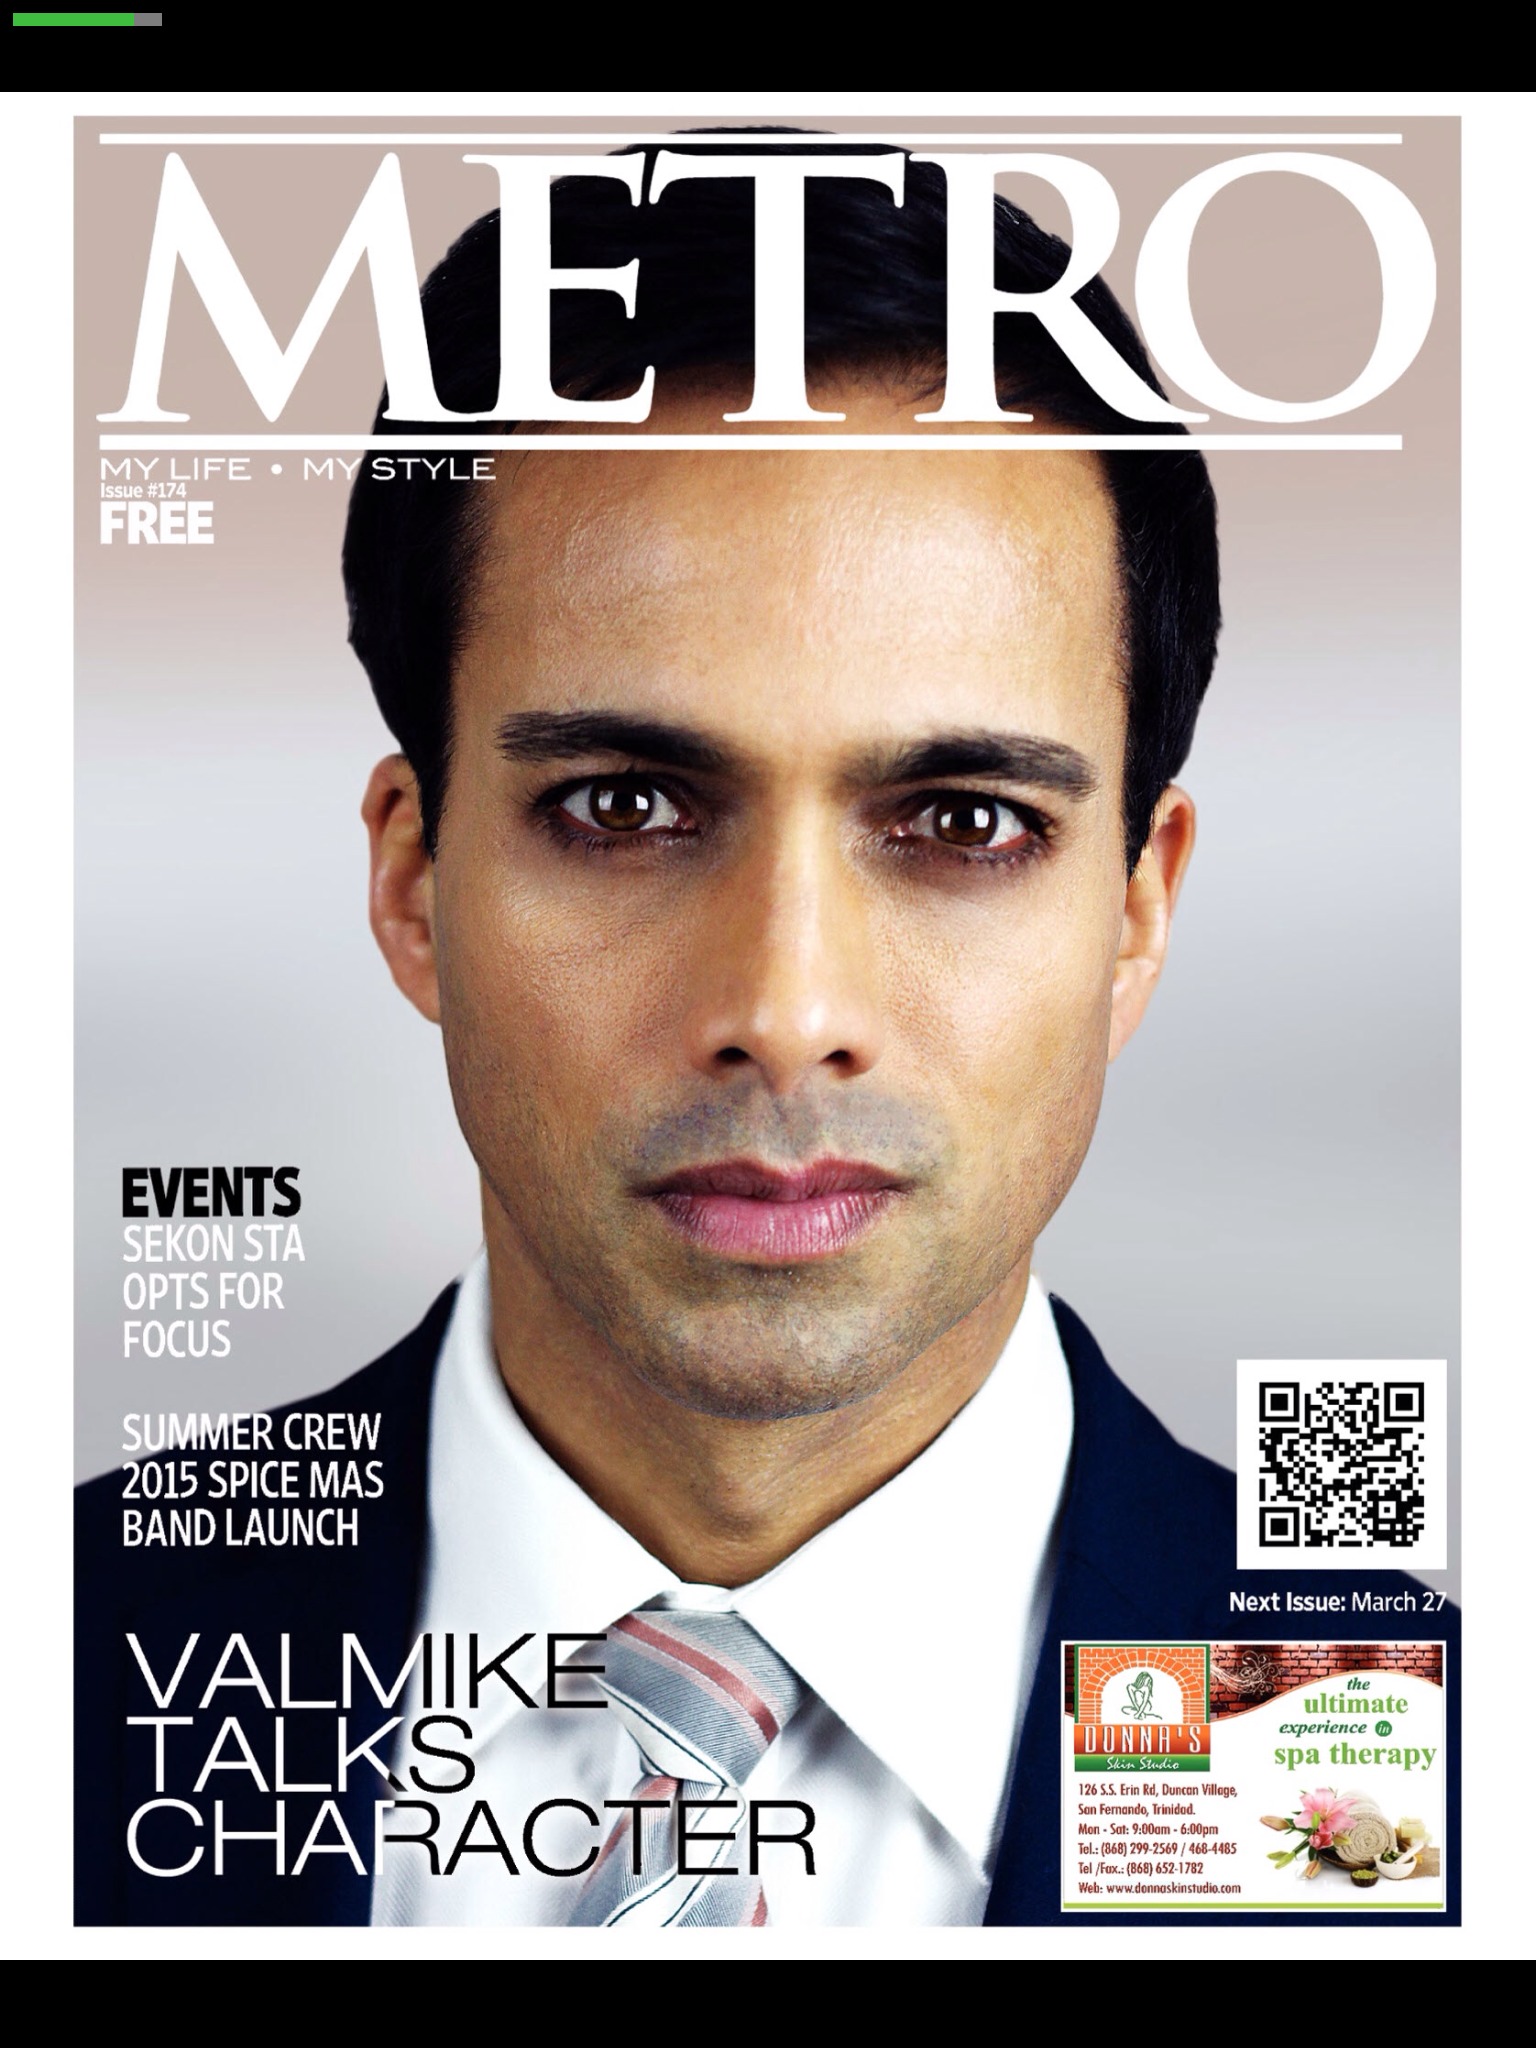 Metro Cover interview